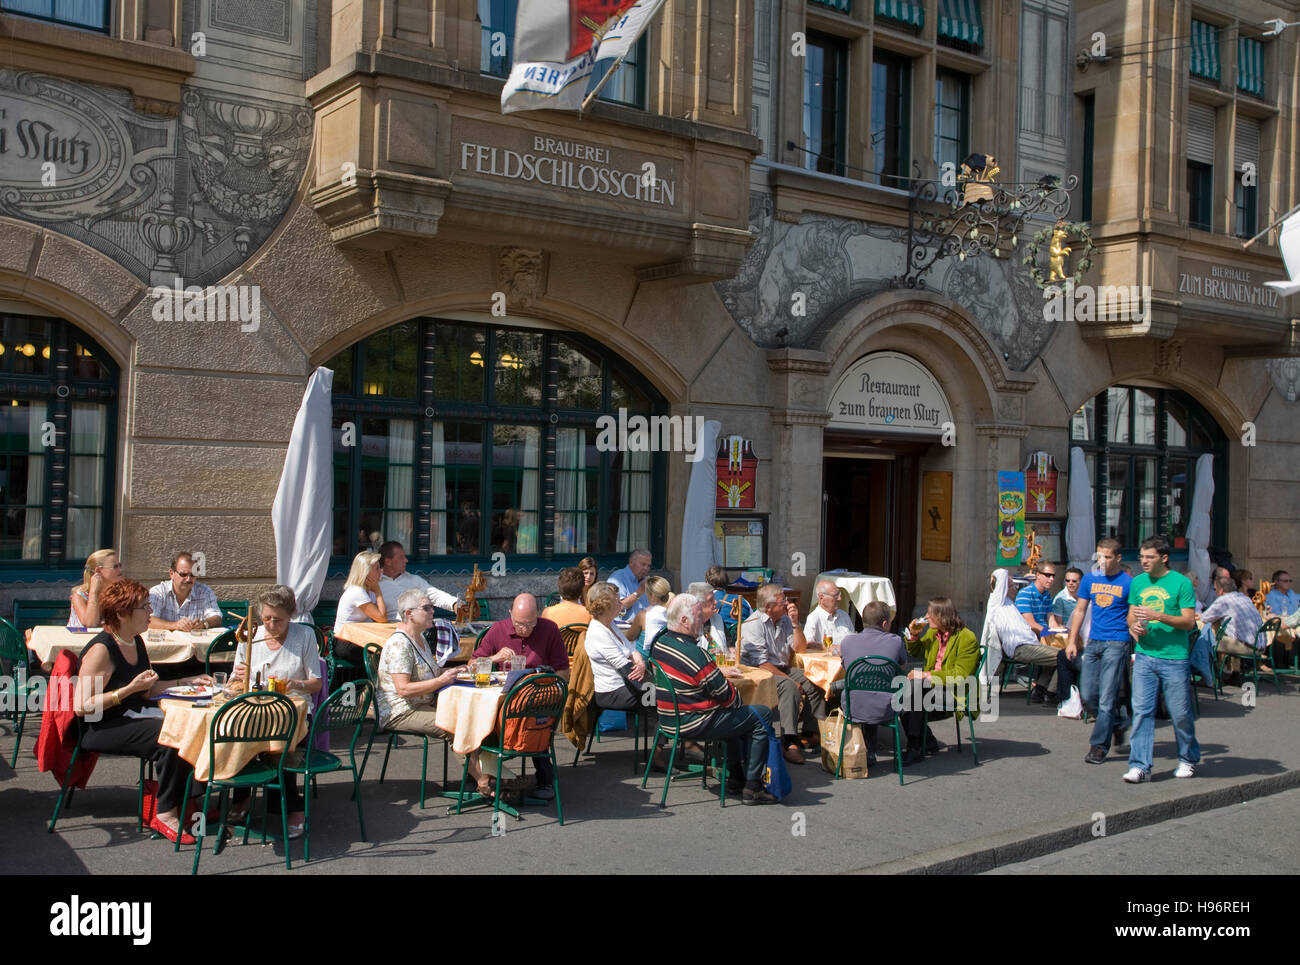 Zum Braunen Mutz Restaurant, people, Barfuesserplatz Square, Basel, Switzerland Stock Photo